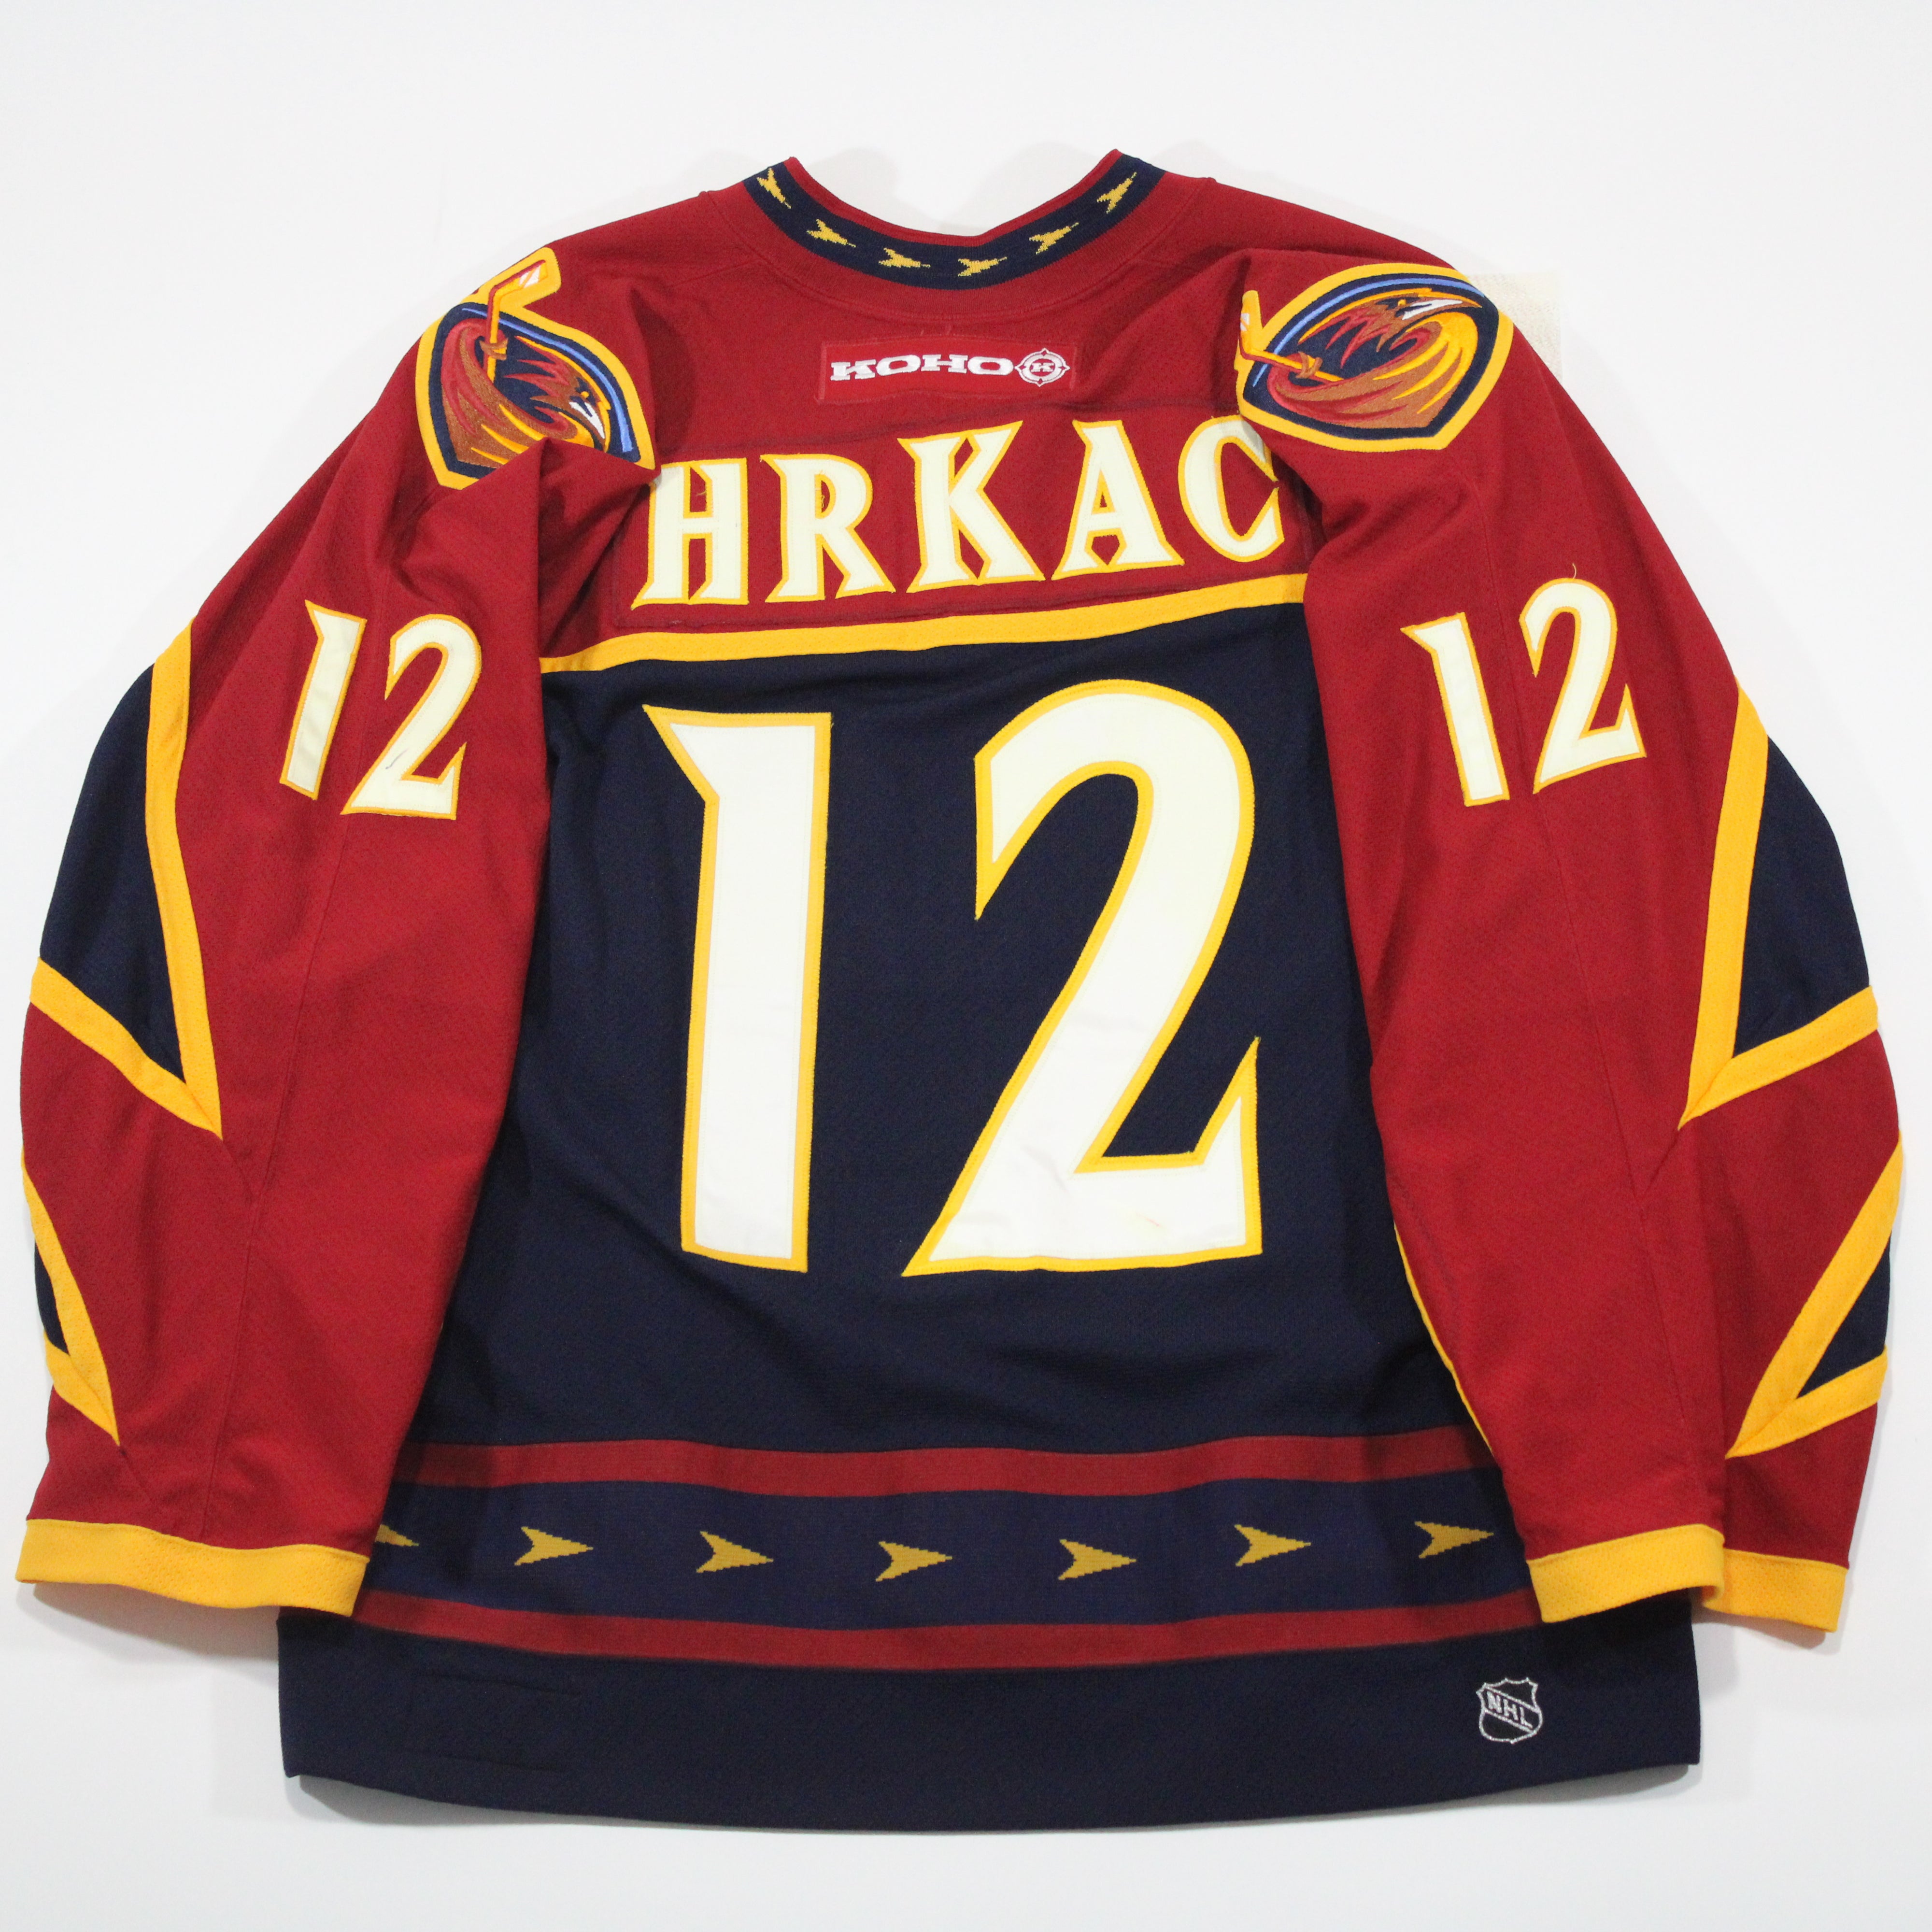 Sold at Auction: 2002-2003 Atlanta Thrashers Signed Hockey Helmet